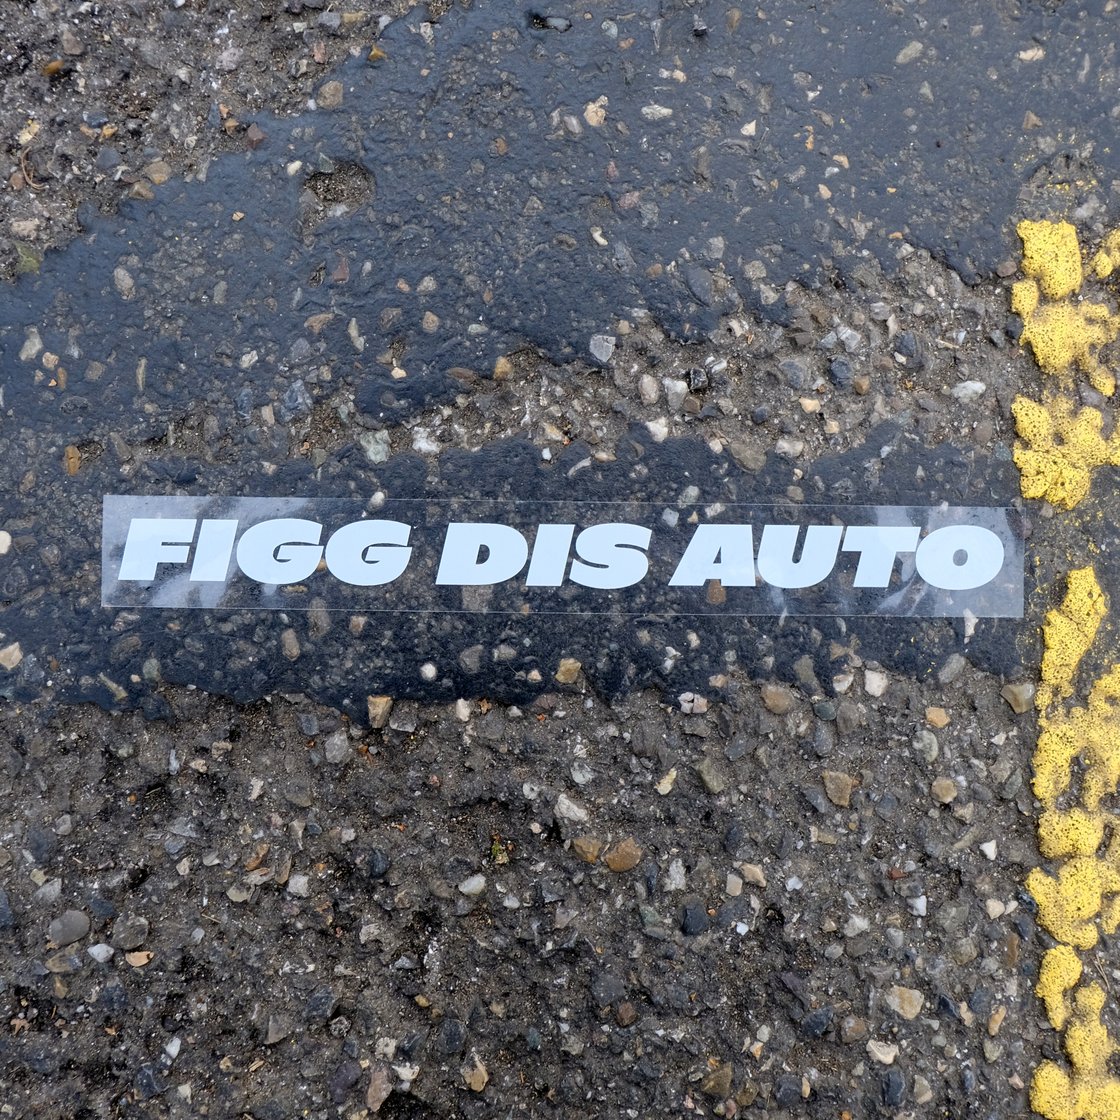 Image of FIGG DIS AUTO FESCHT Pack